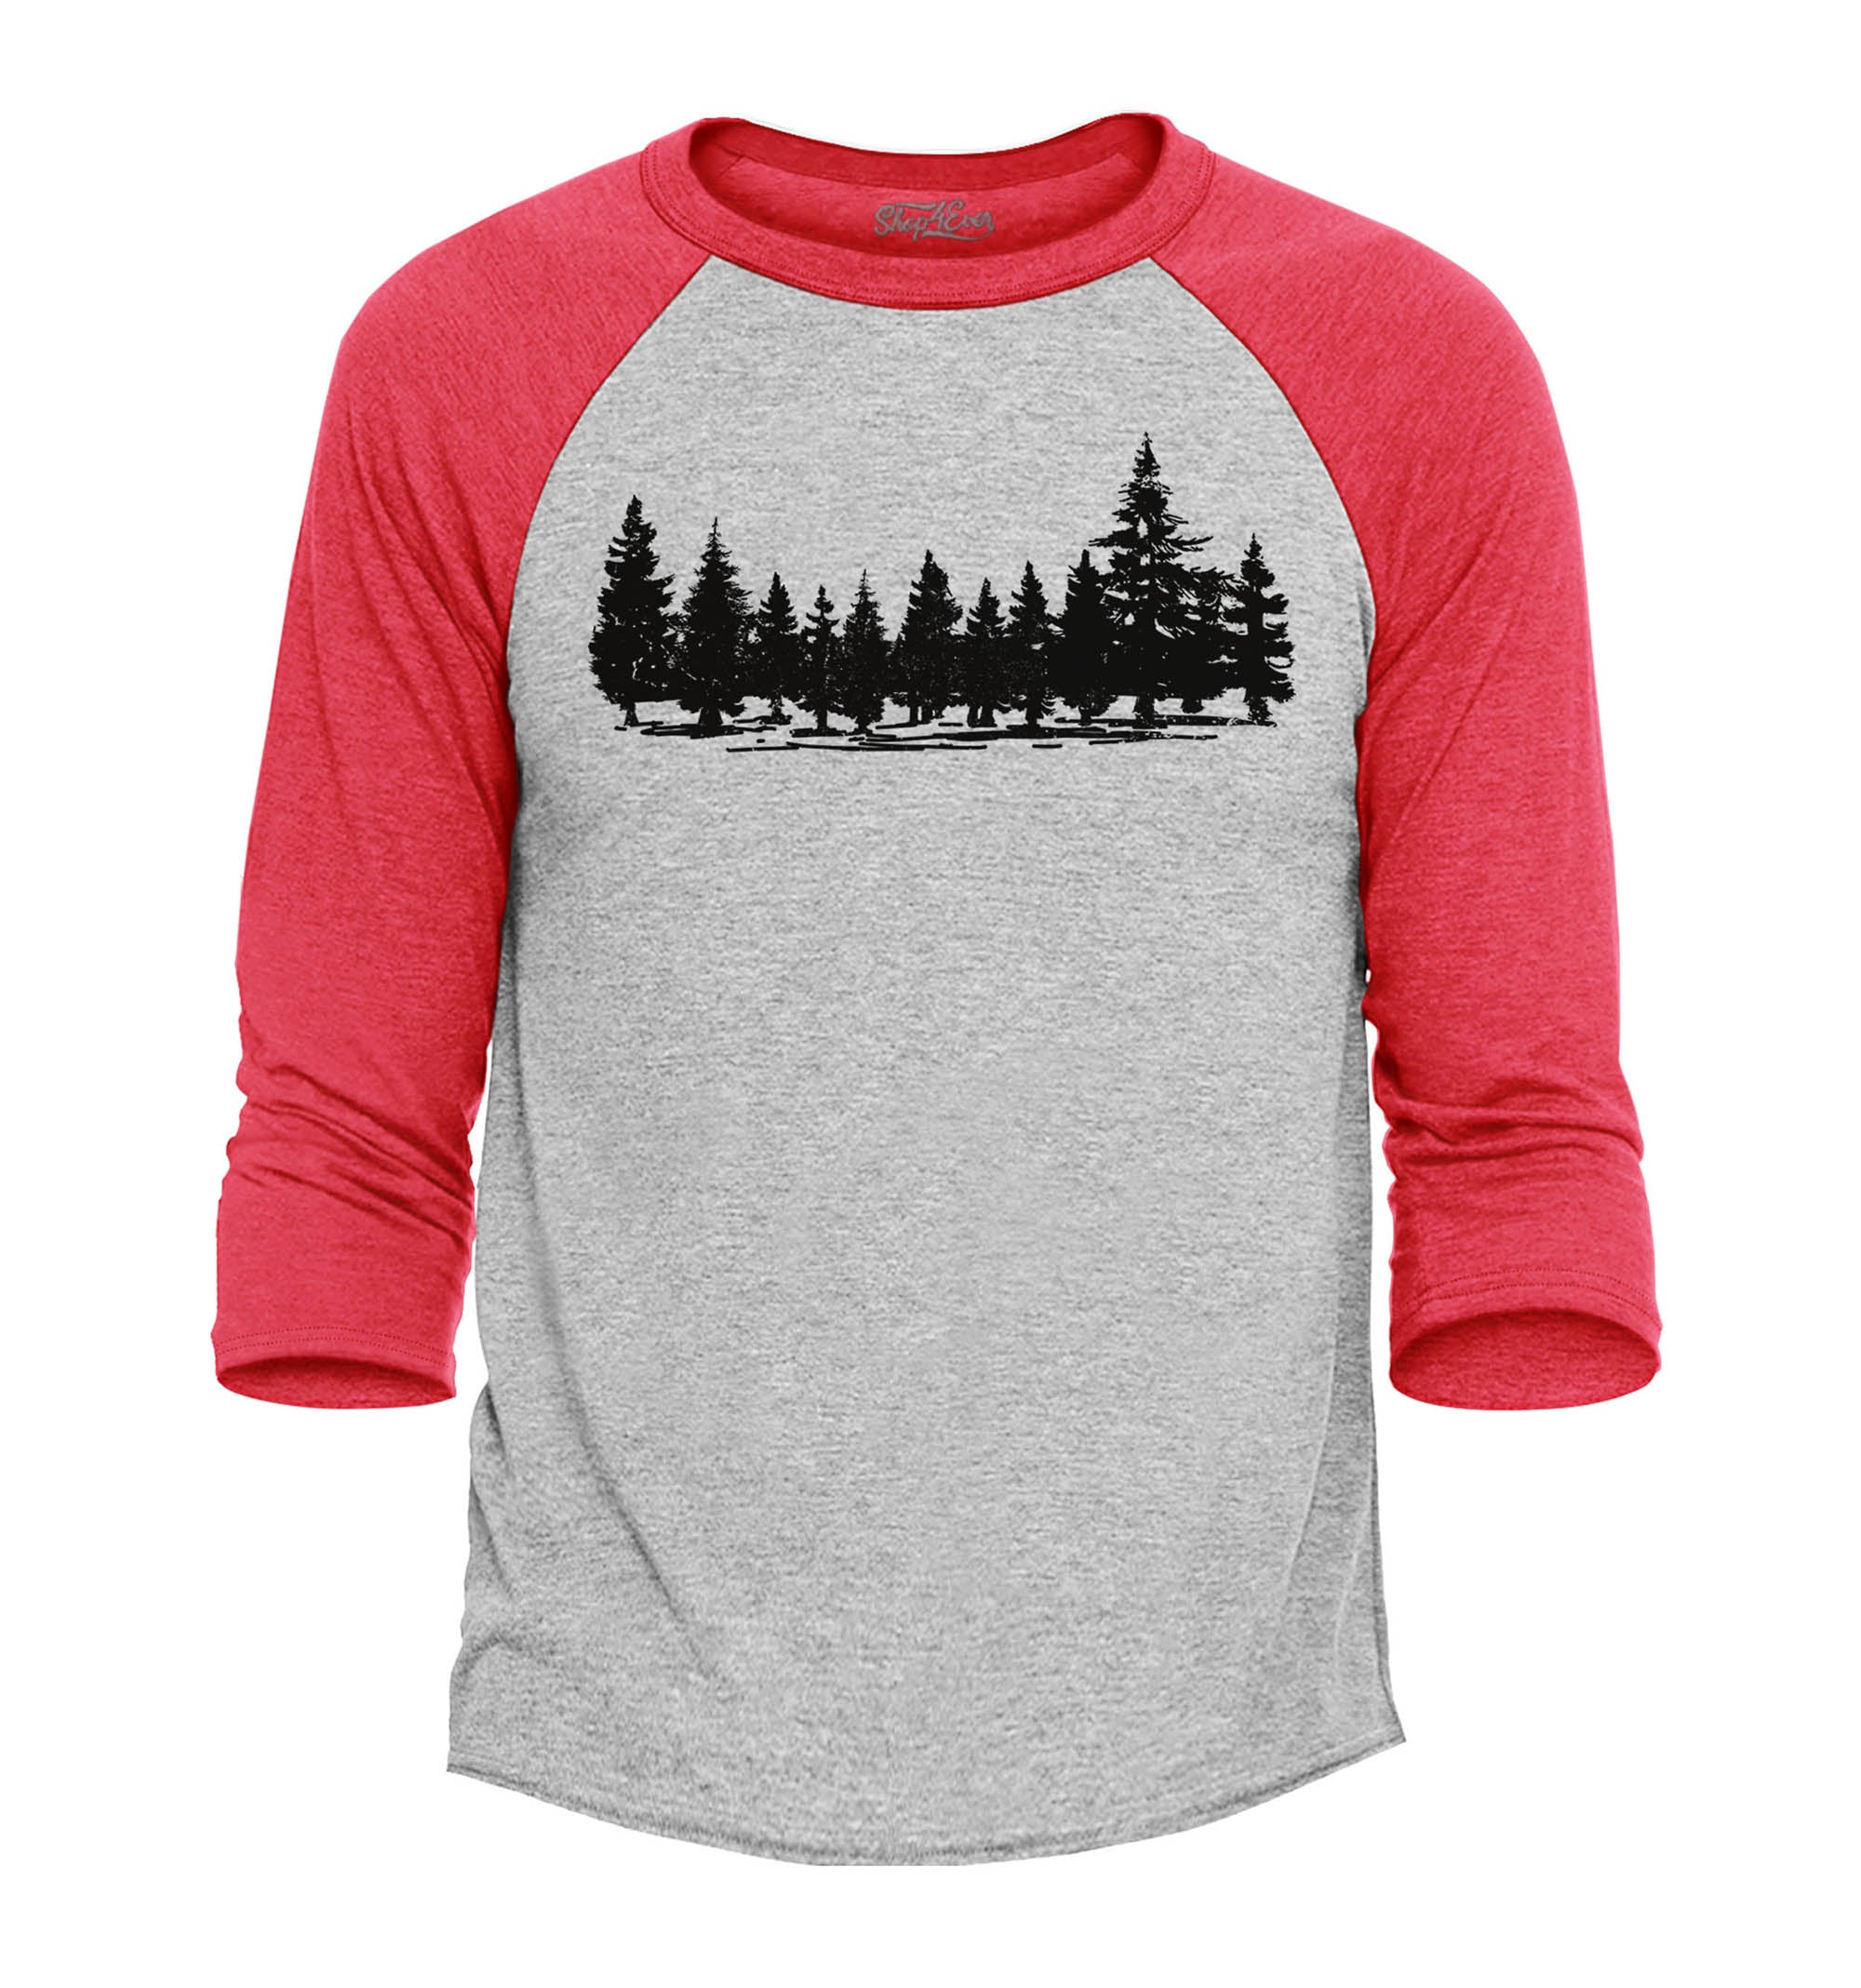 Forest Trees Nature Mountains Wildlife Raglan Baseball Shirt